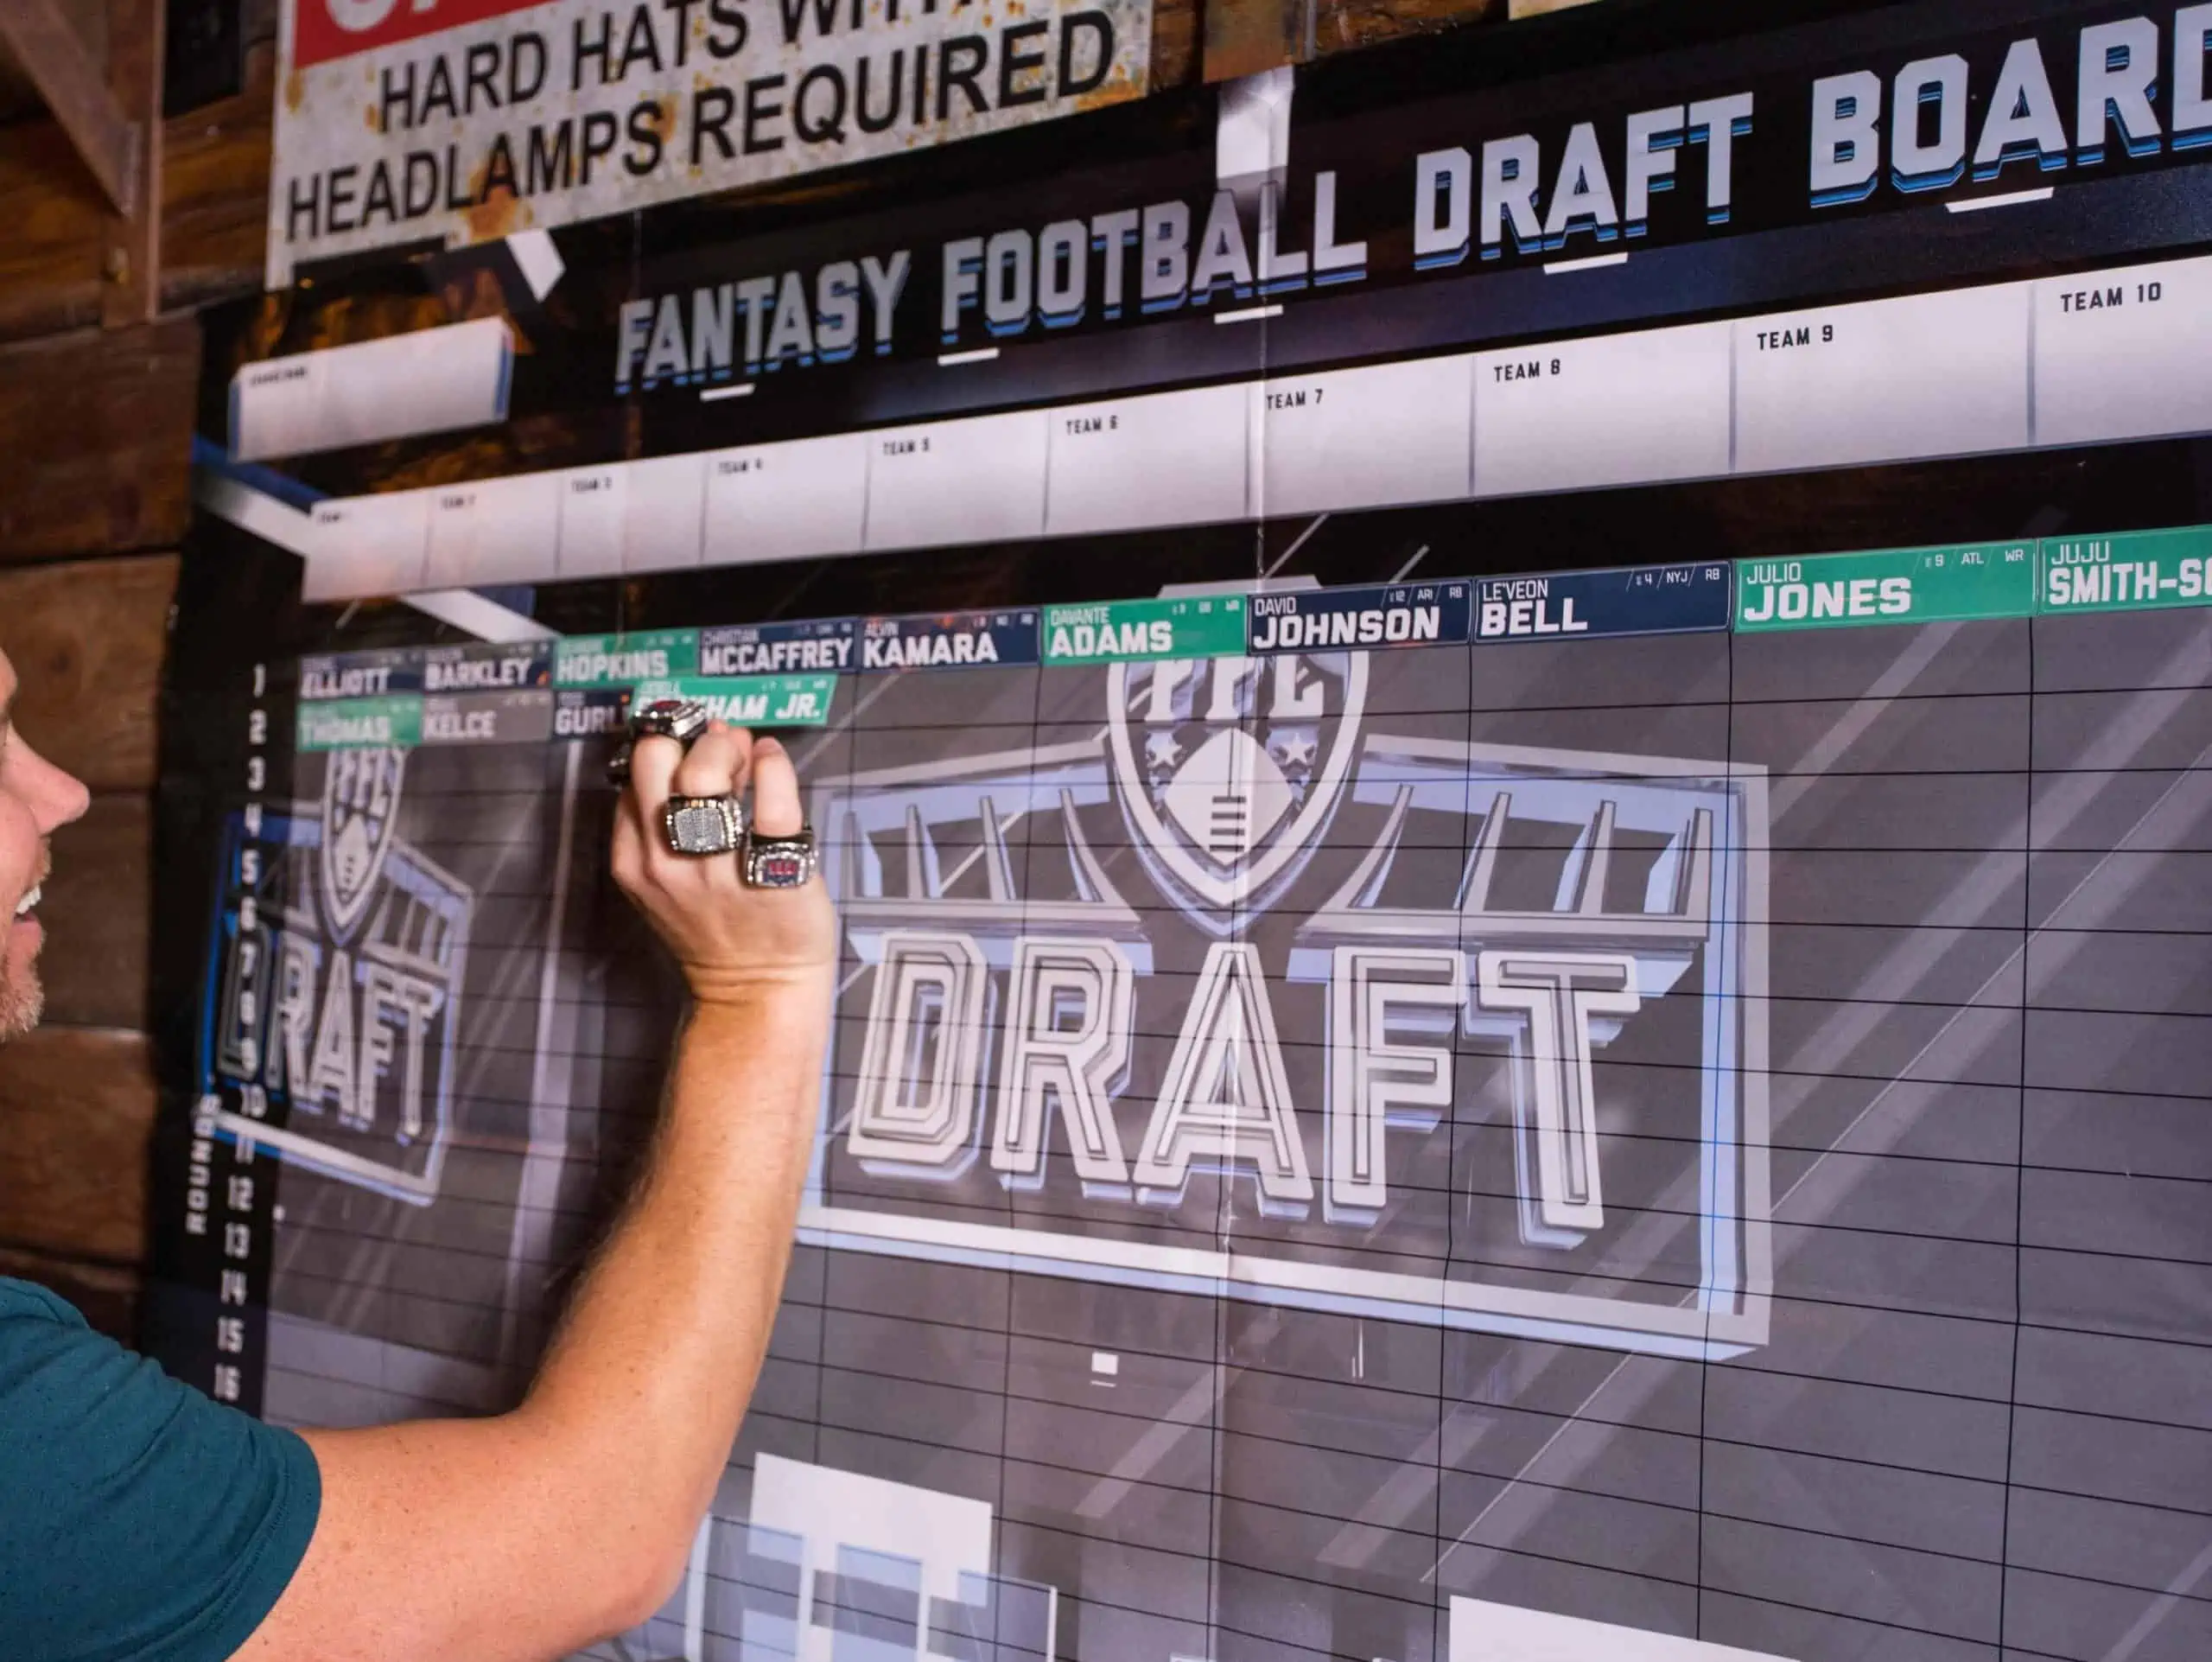 Fantasy foot ball draft board where people budget money to draft a fake football team